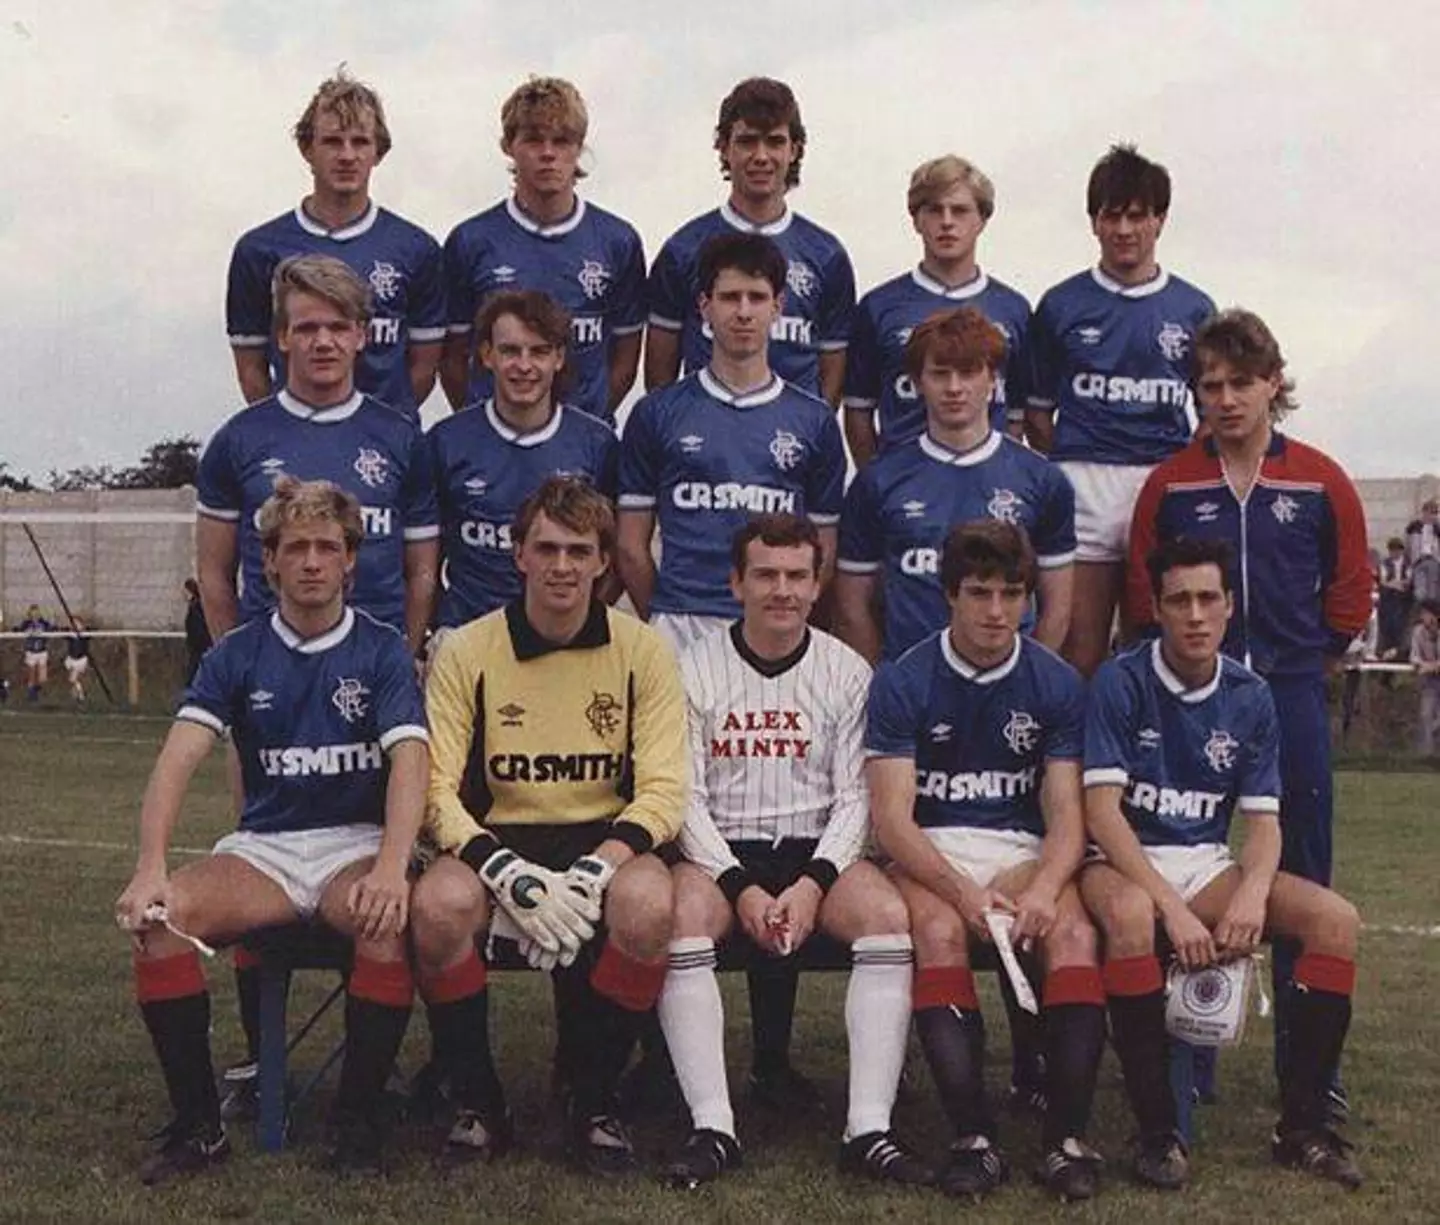 Here's Gordon Ramsay in the Rangers team photo.